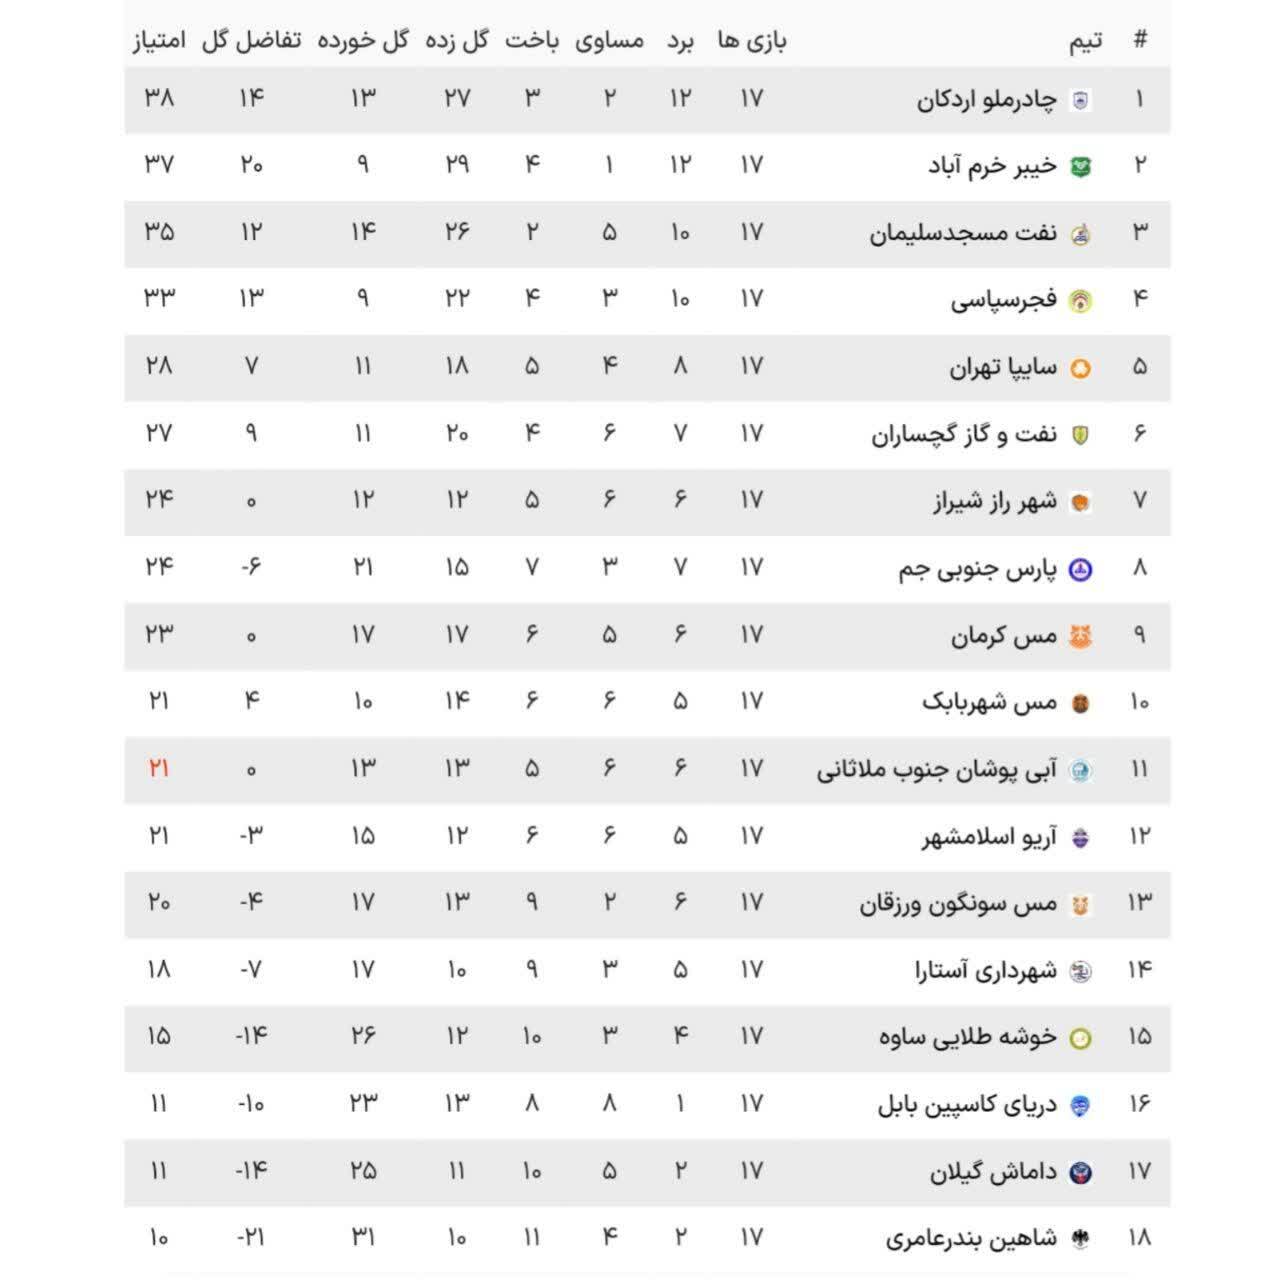 نتایج هفته هفدهم لیگ دسته اول (جدول)